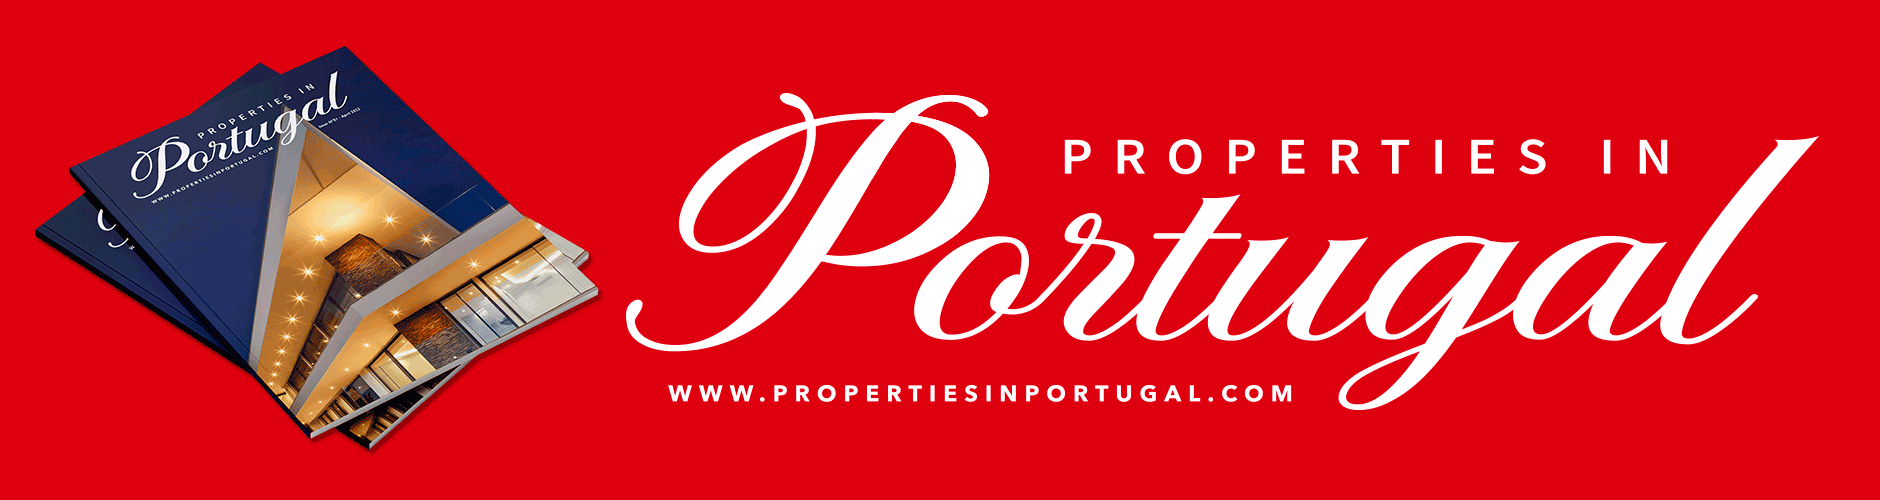 Properties in Portugal